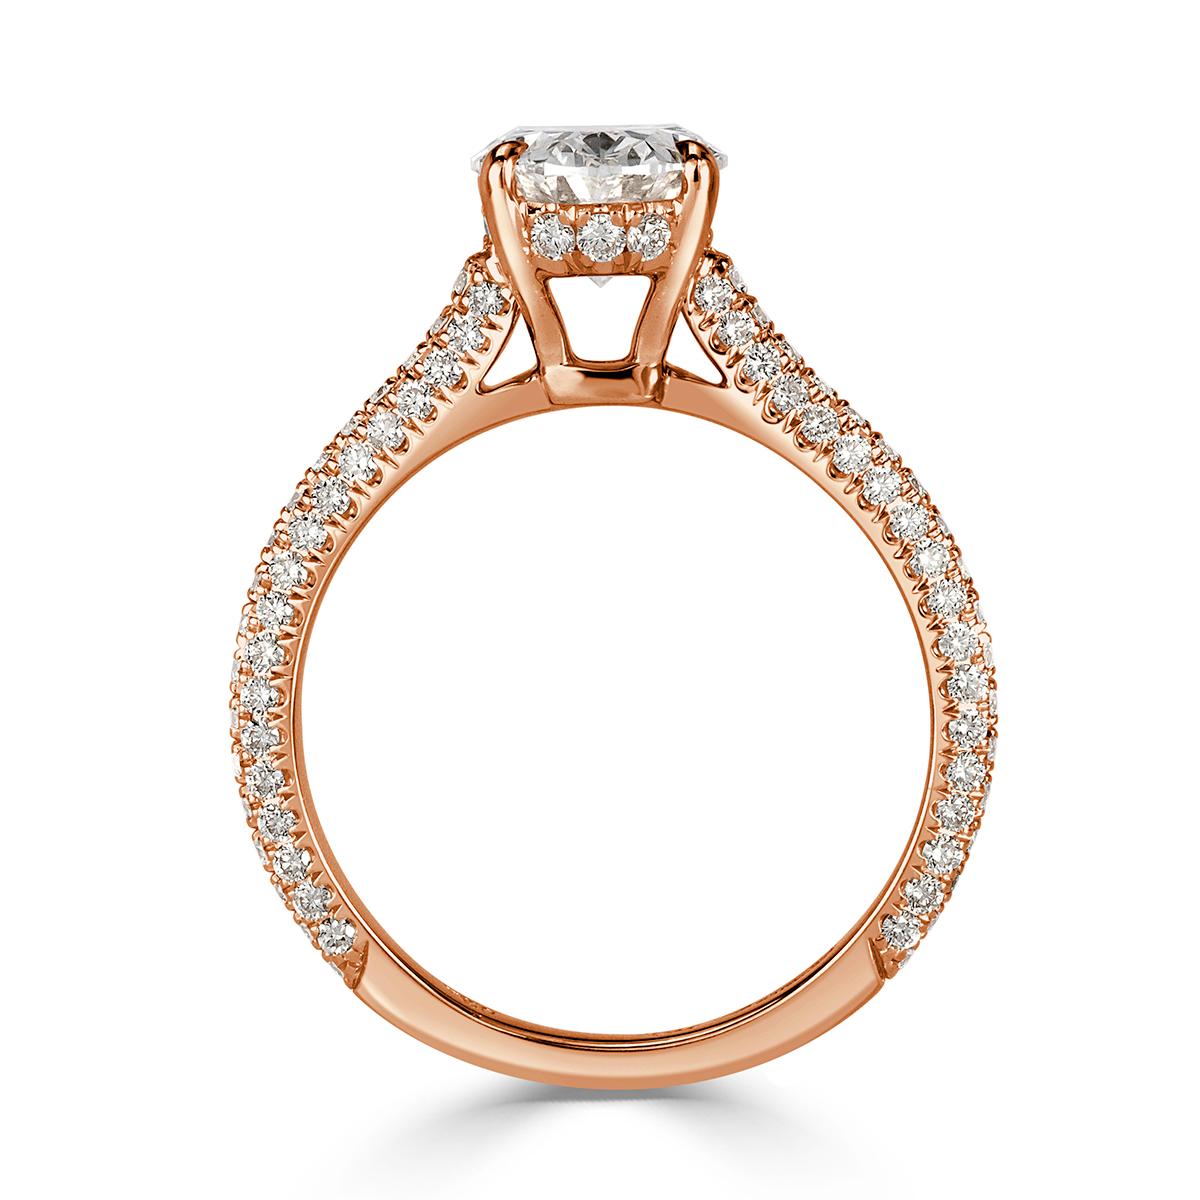 Women's or Men's Mark Broumand 1.97 Carat Oval Cut Diamond Engagement Ring